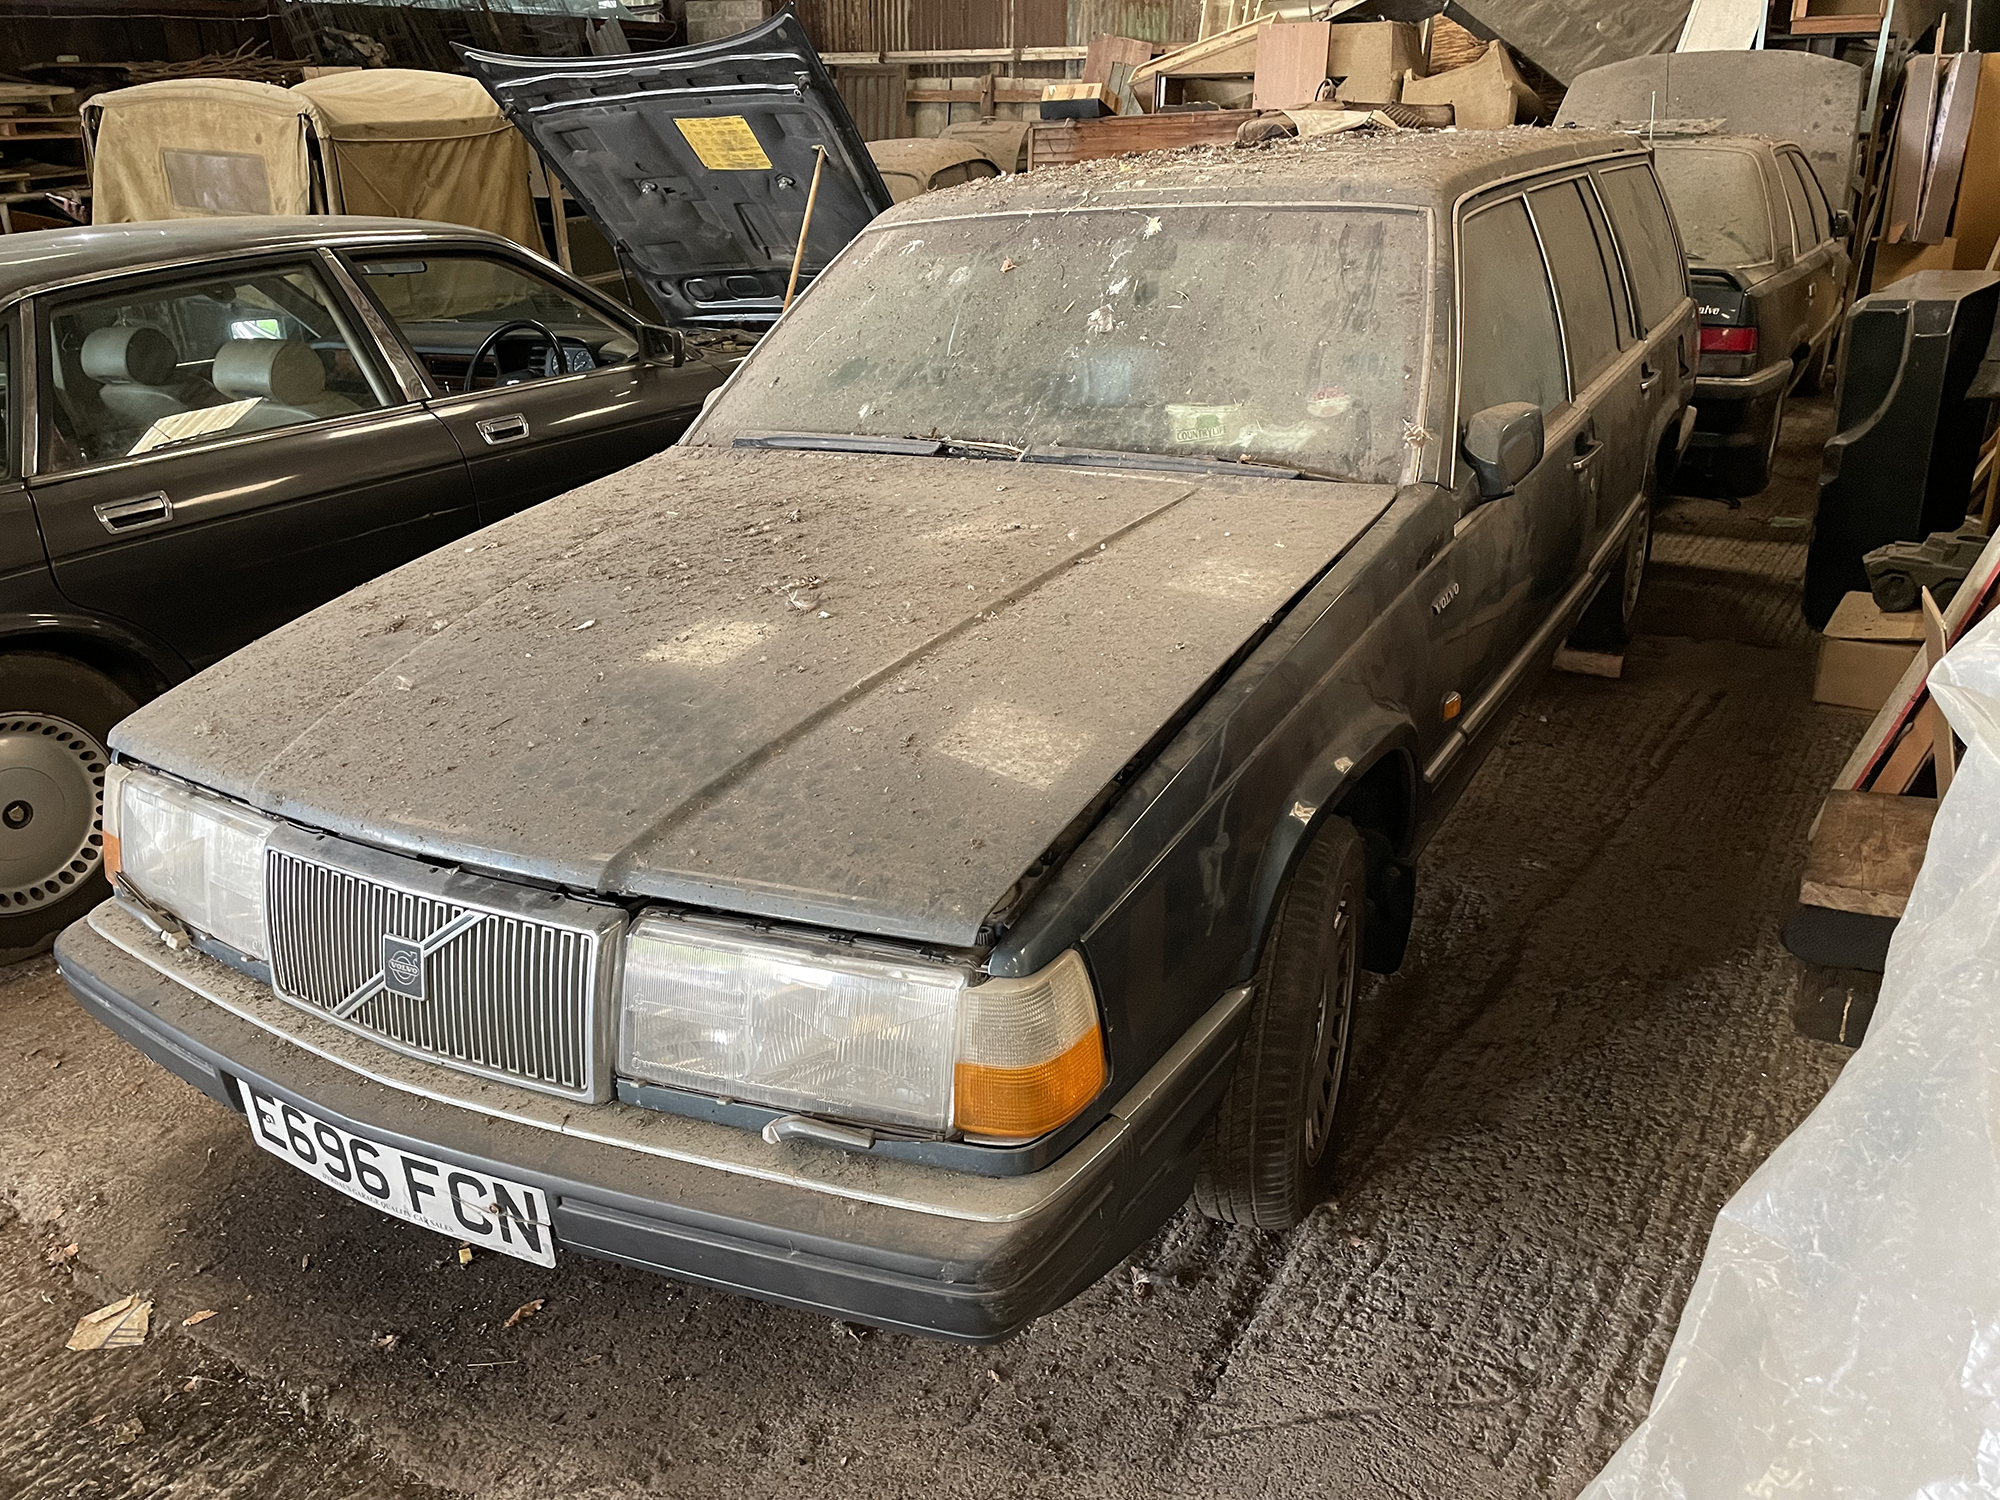 1988 Volvo 760 GLE Estate Reg. no. E696 FCN Chassis no. YV1765687J0020932 - Image 3 of 14